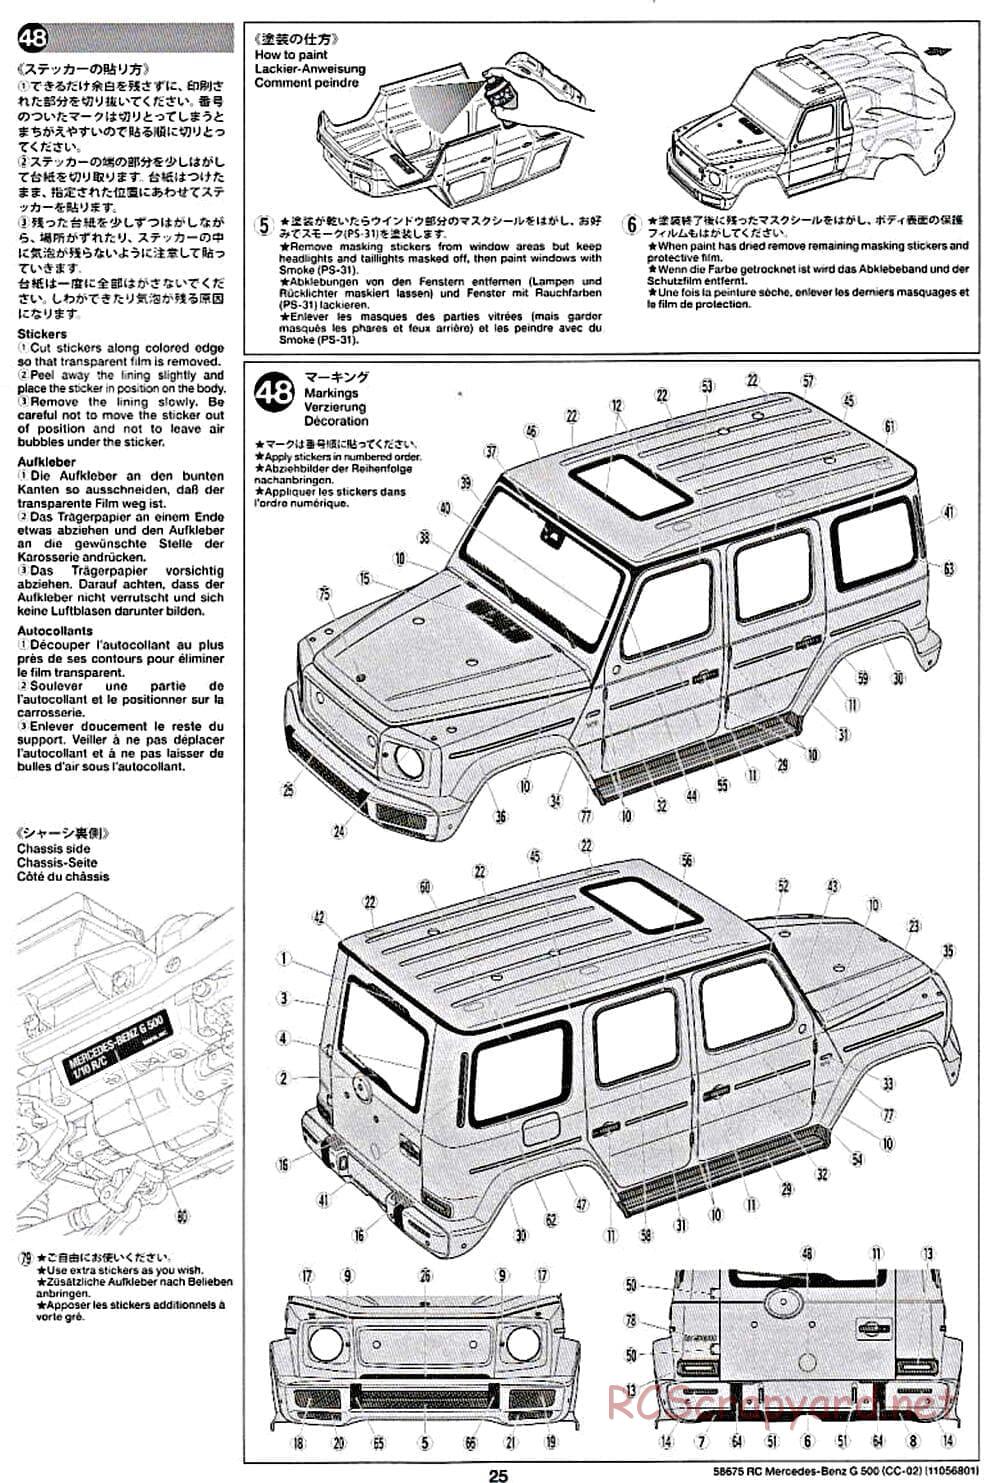 Tamiya - Mercedes-Benz G500 - CC-02 Chassis - Manual - Page 25